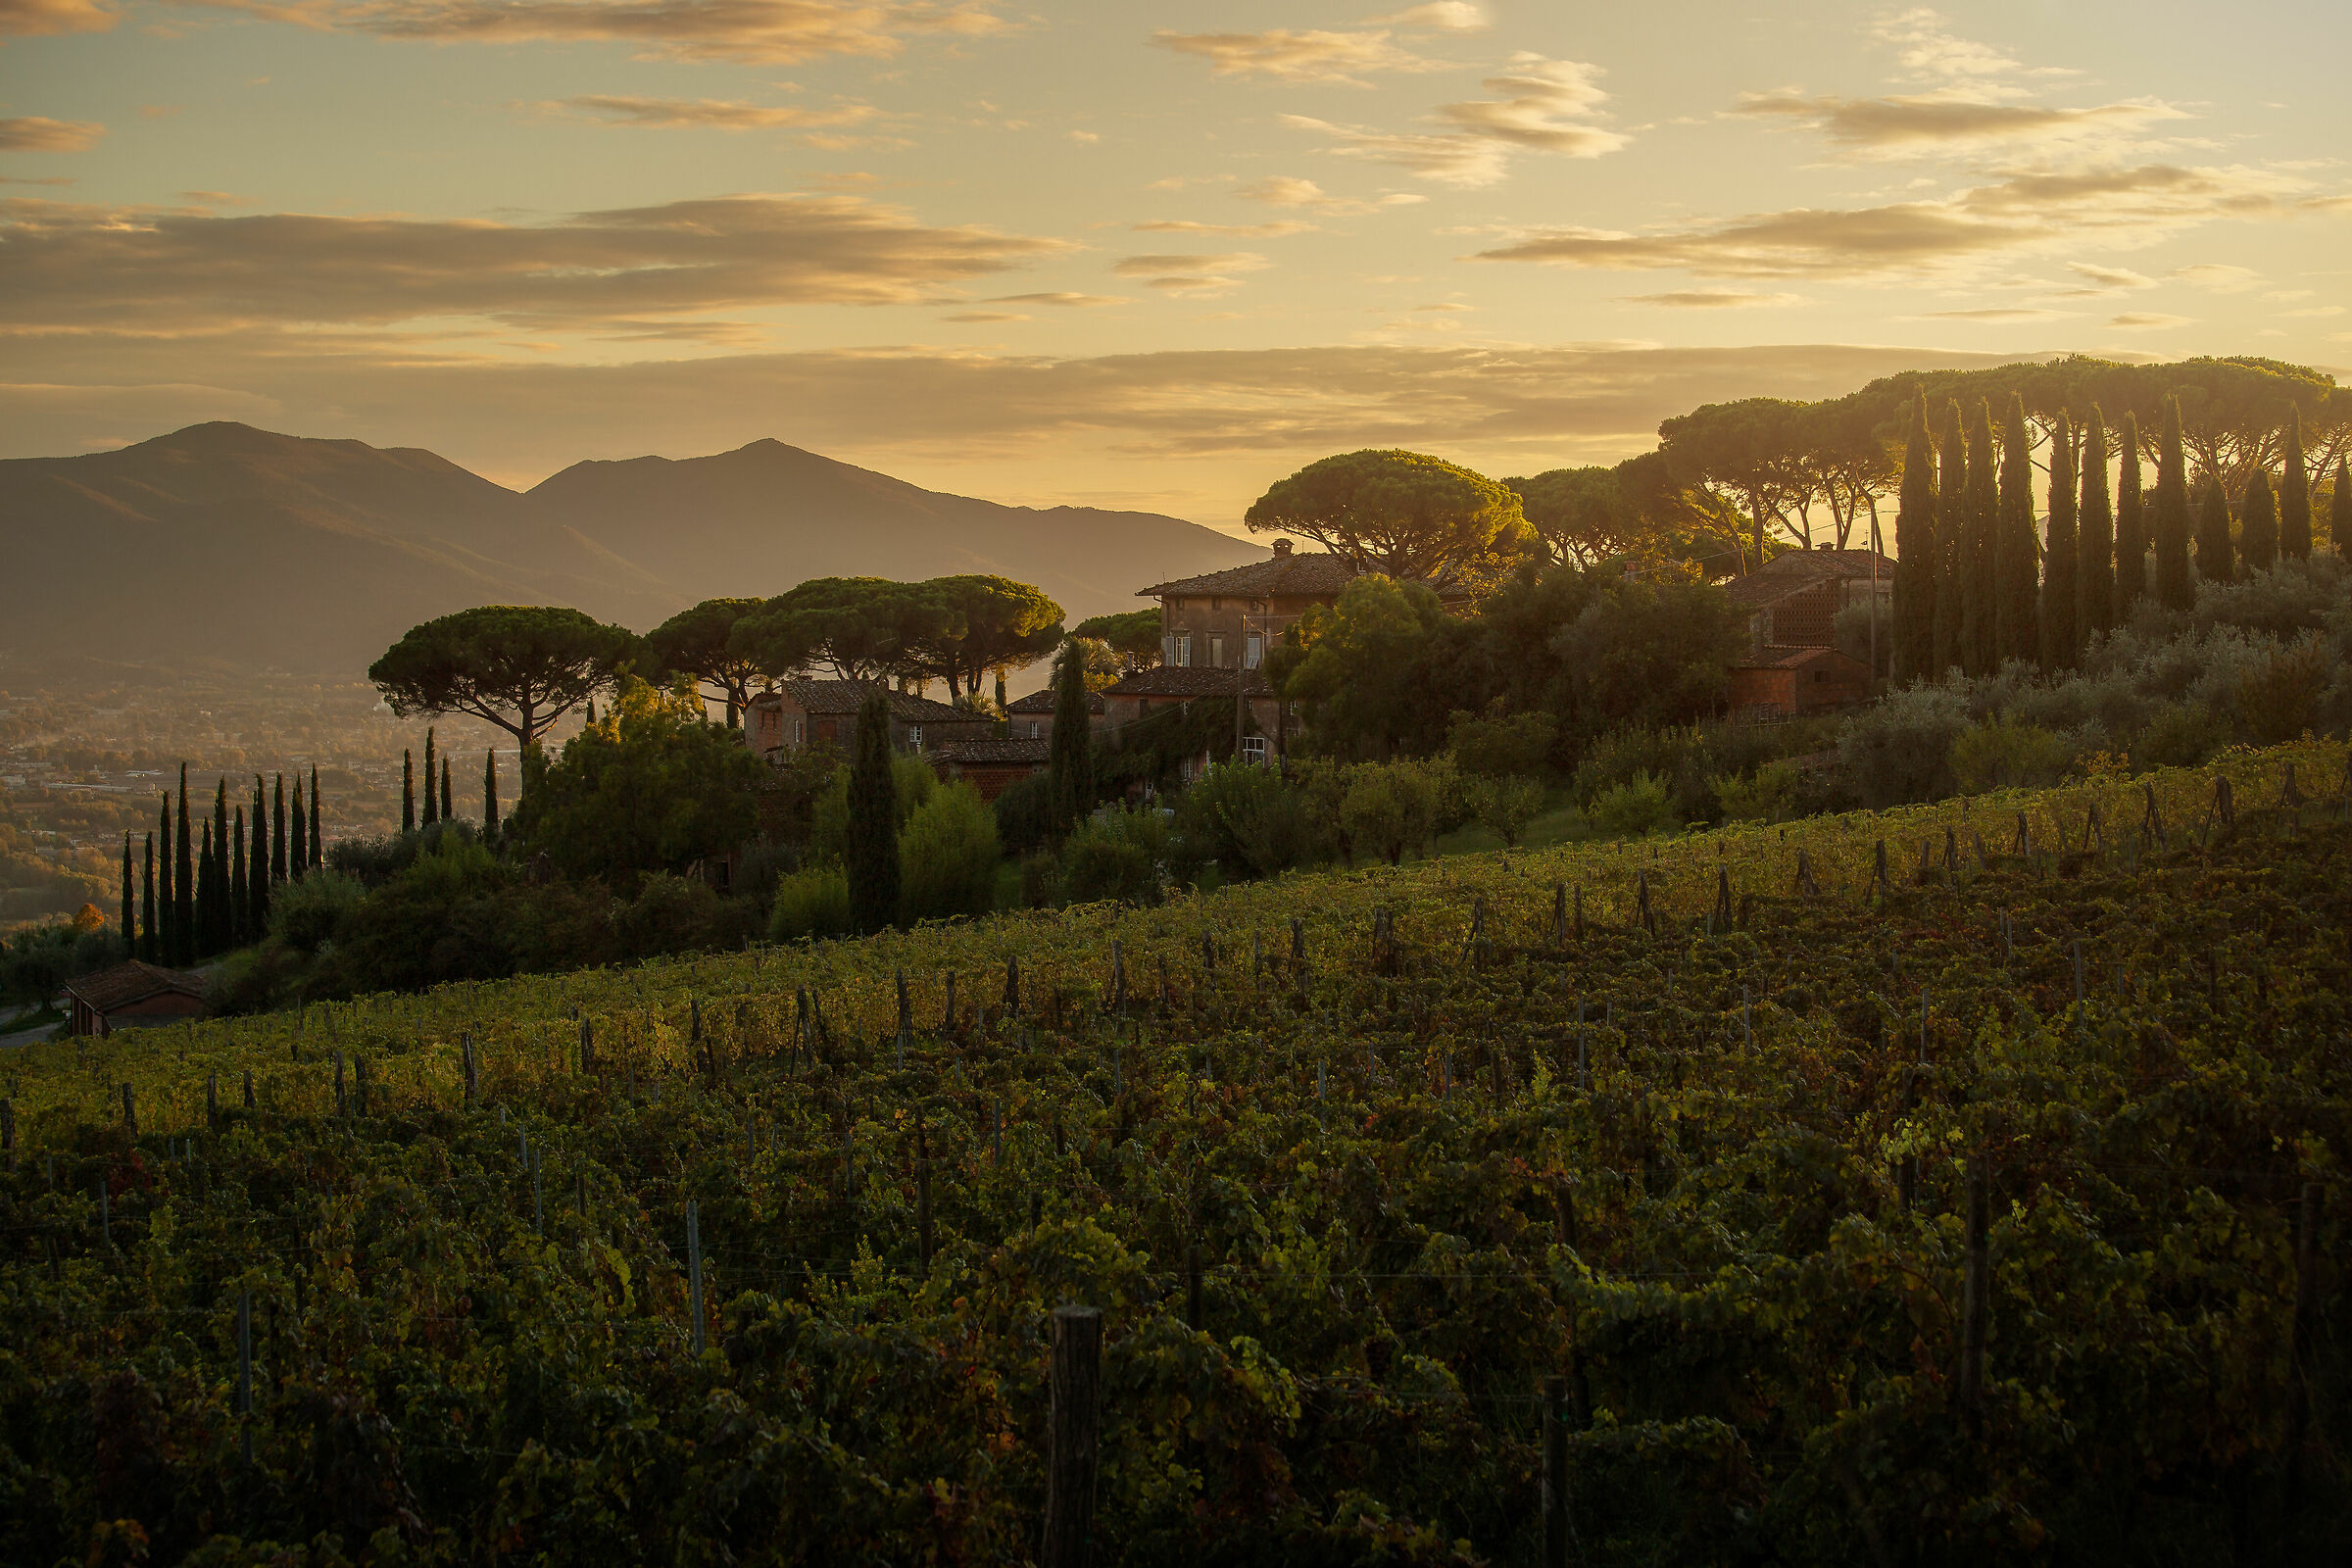 The vineyards of Valgiano...